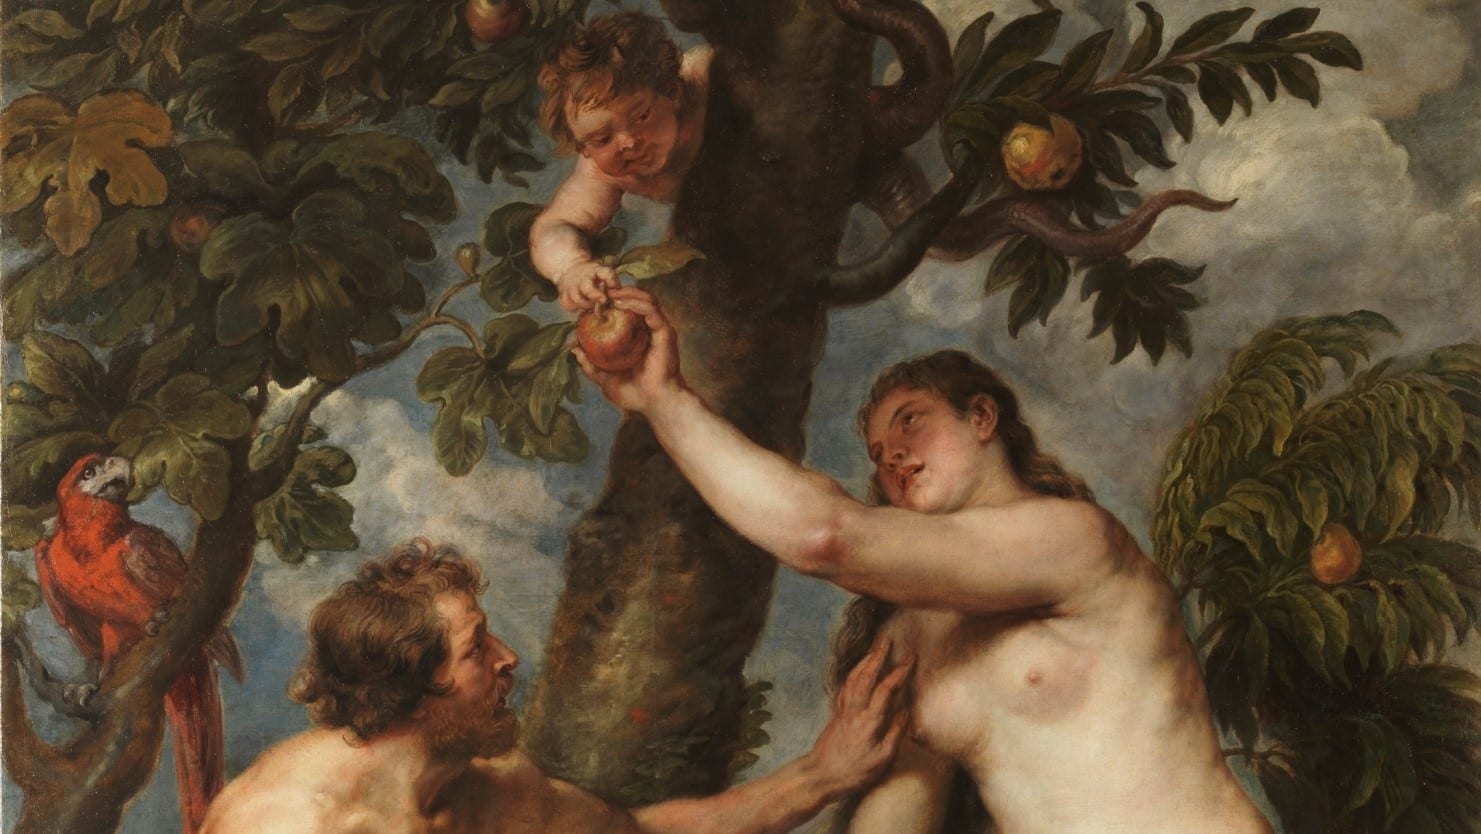 The Fall of Man by Peter Paul Rubens, 1628-29, Public domain, via Wikimedia Commons